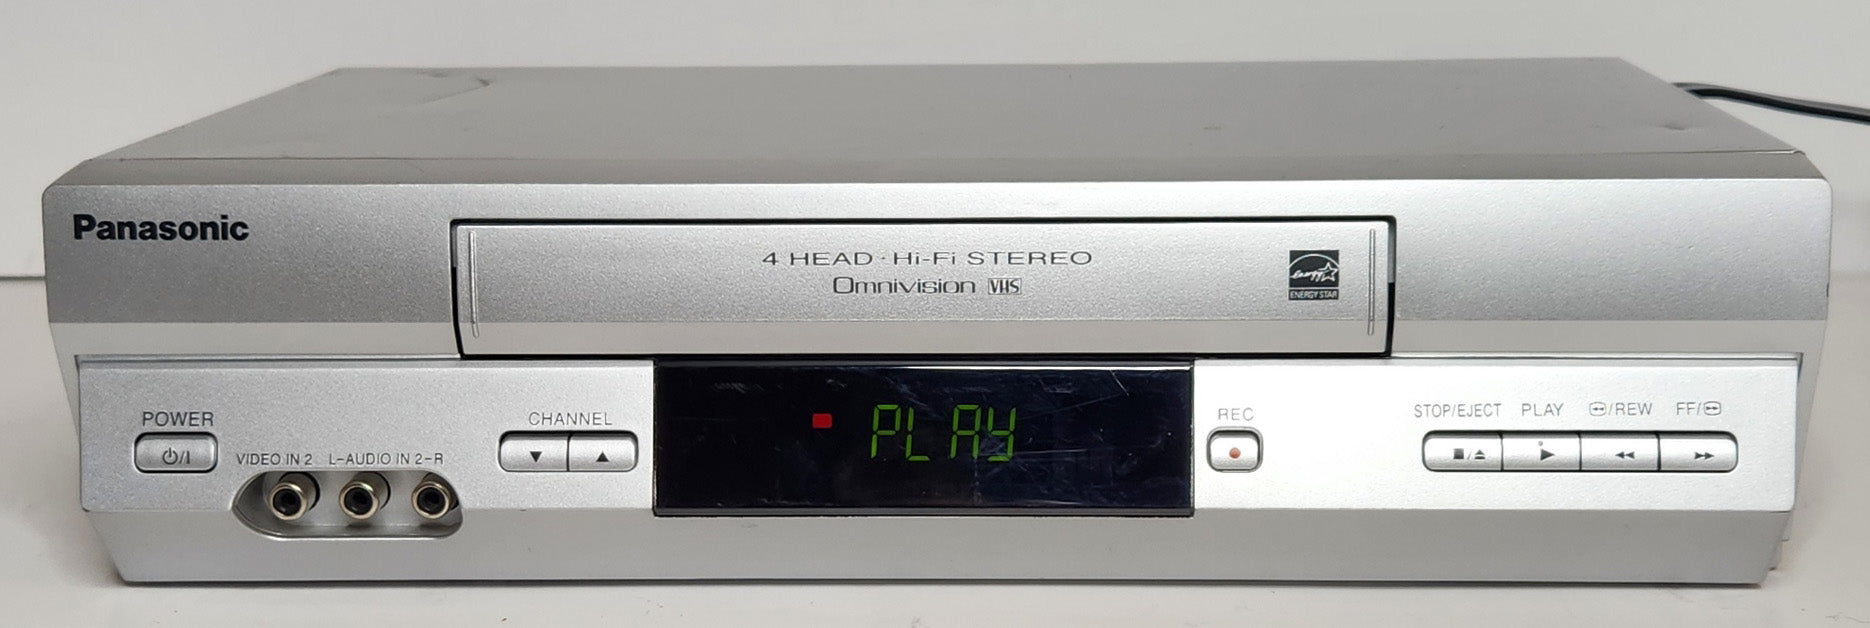 Panasonic PV-V4525S Omnivision VCR, 4-Head Hi-Fi Stereo - Front